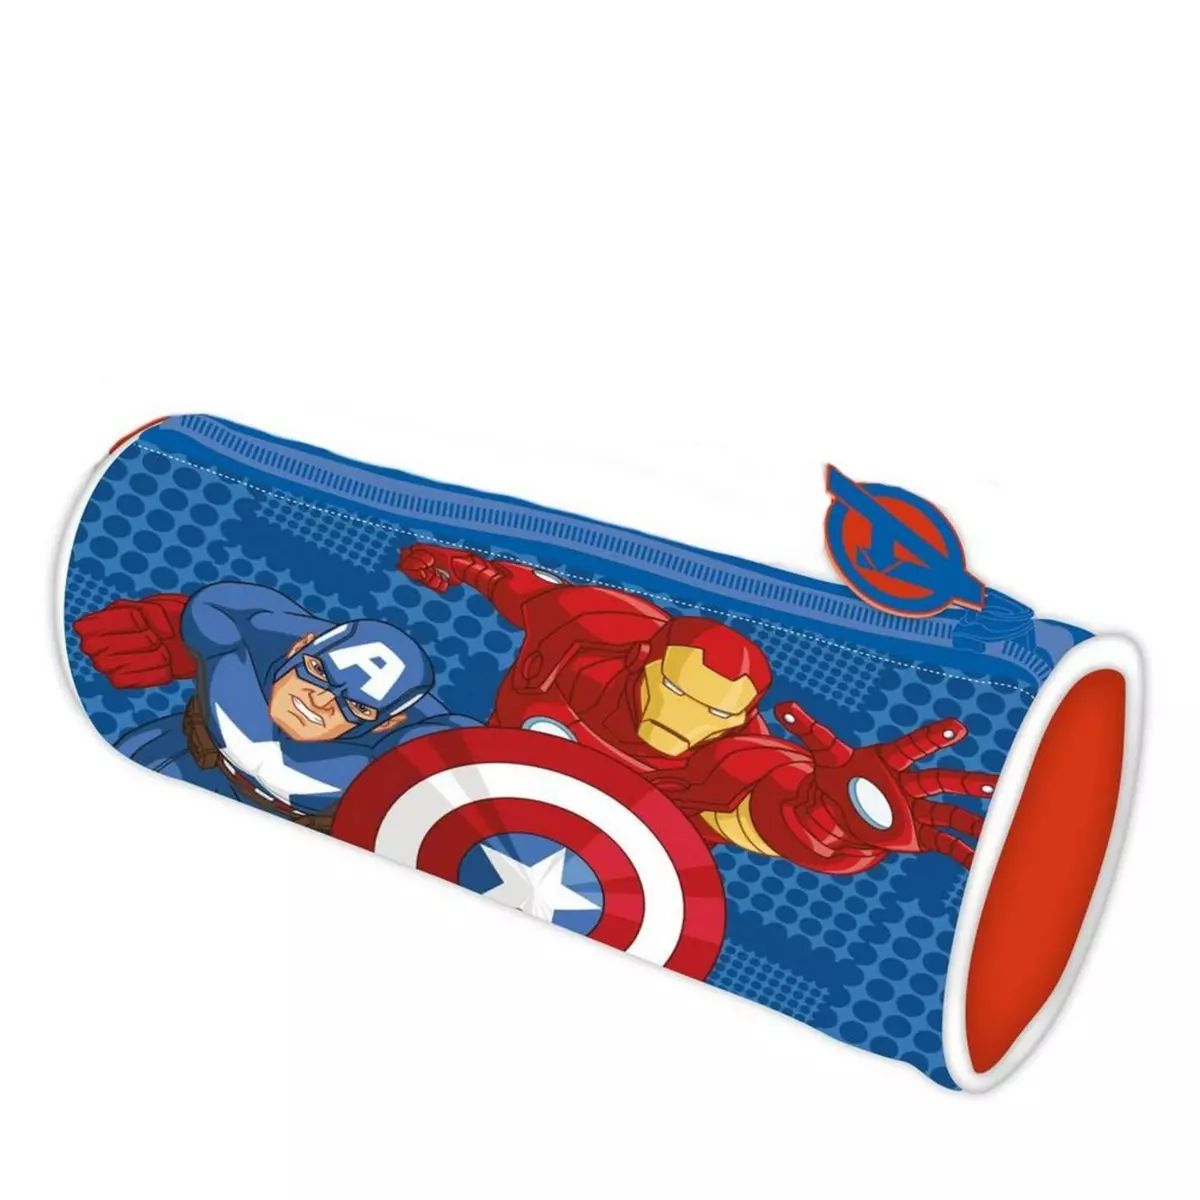 Avengers Trousse ronde Les Avengers tube ecole enfant